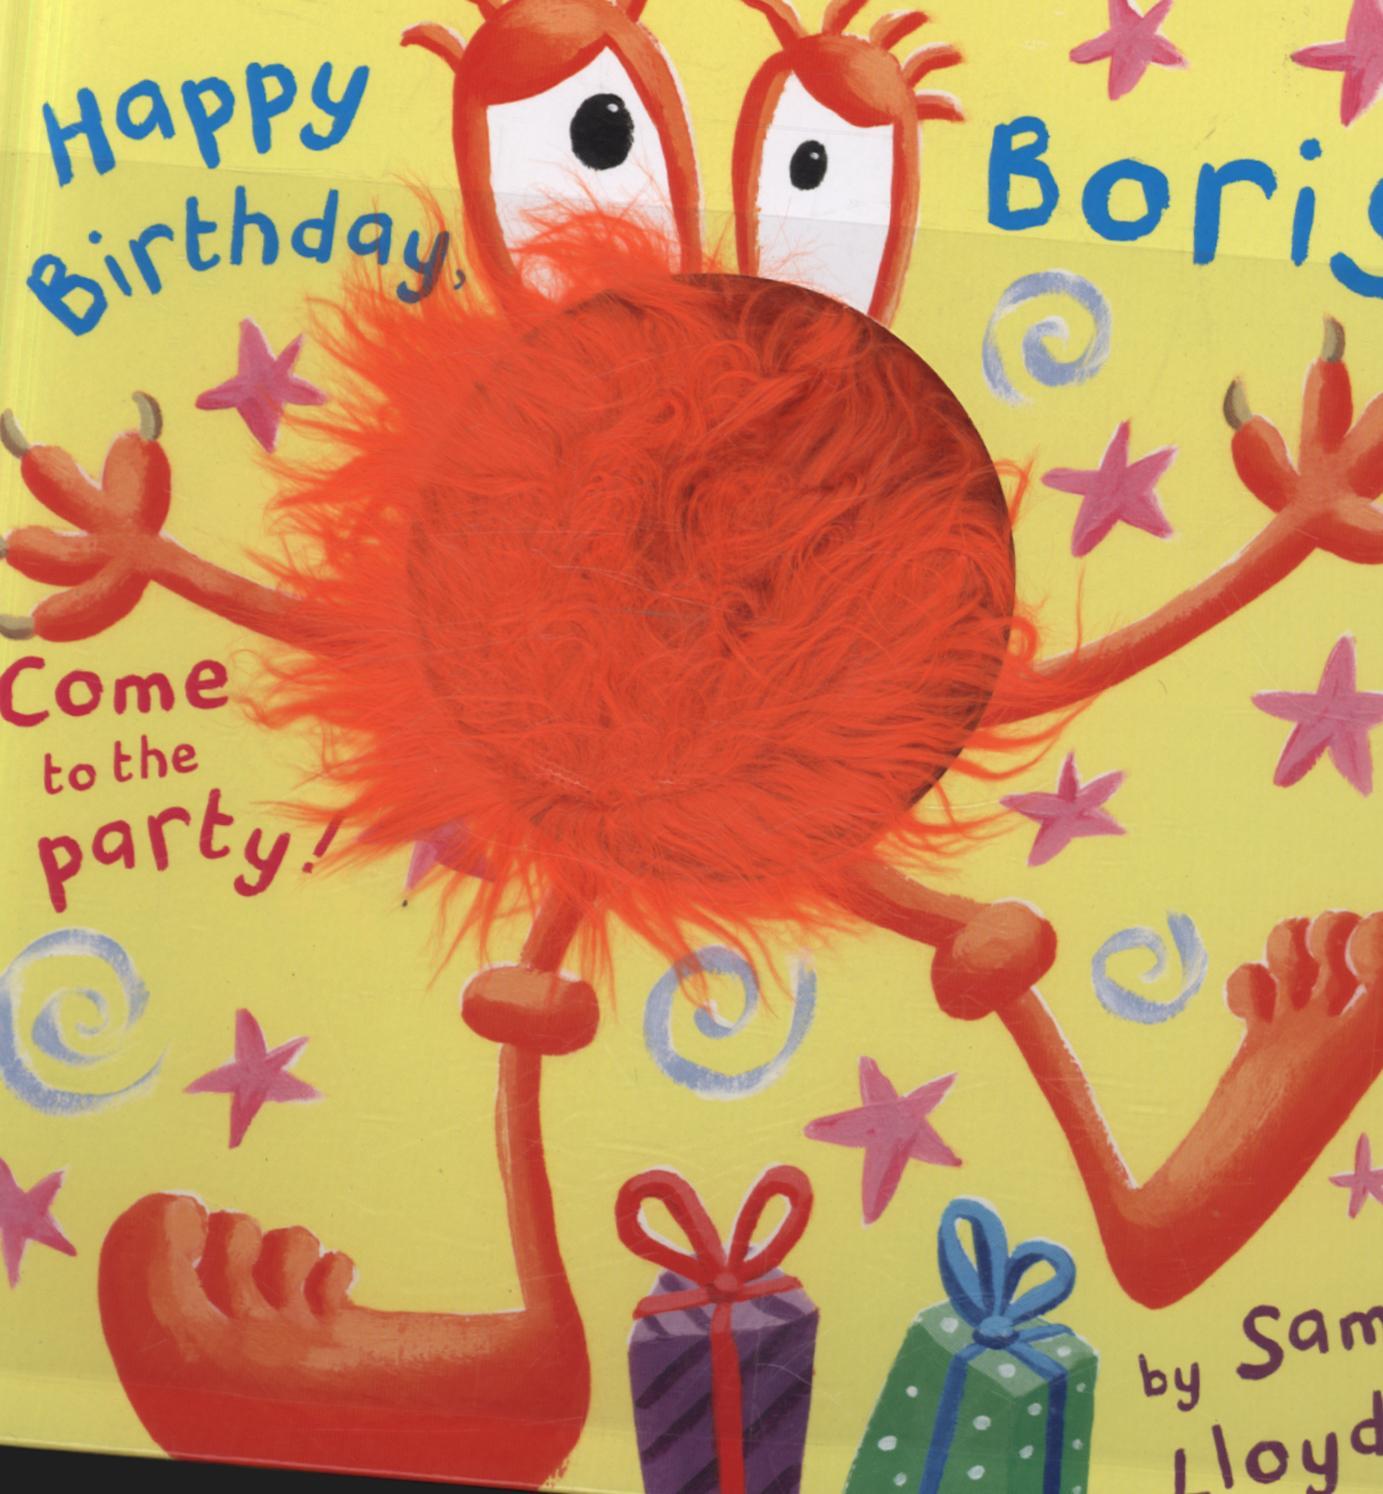 Happy Birthday, Boris!